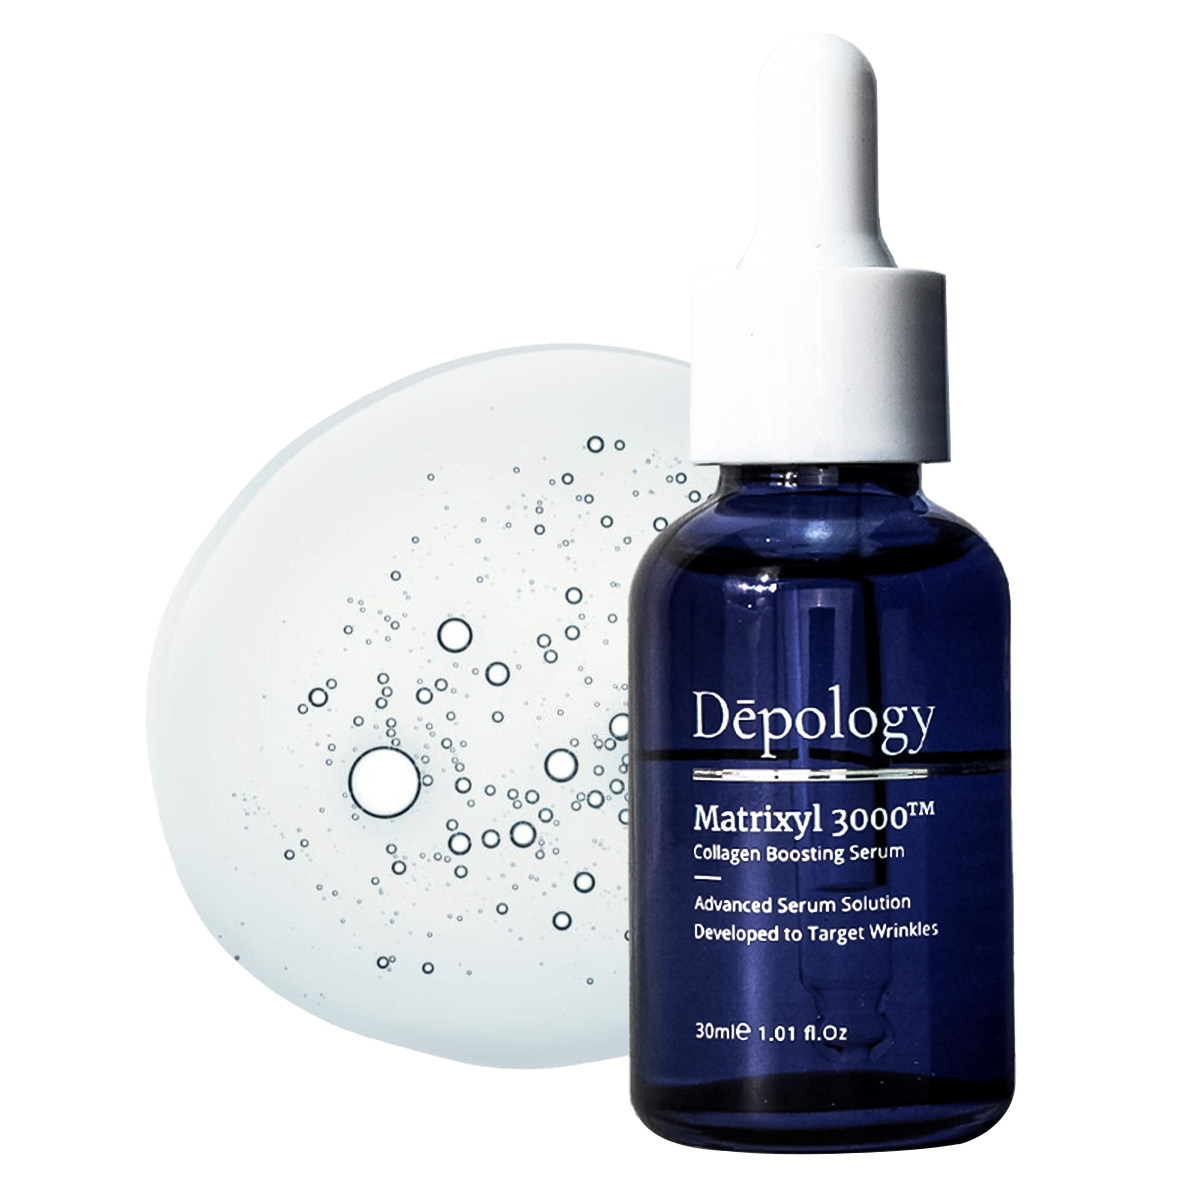 Best Matrixyl 3000 Collagen boosting serum for your skin